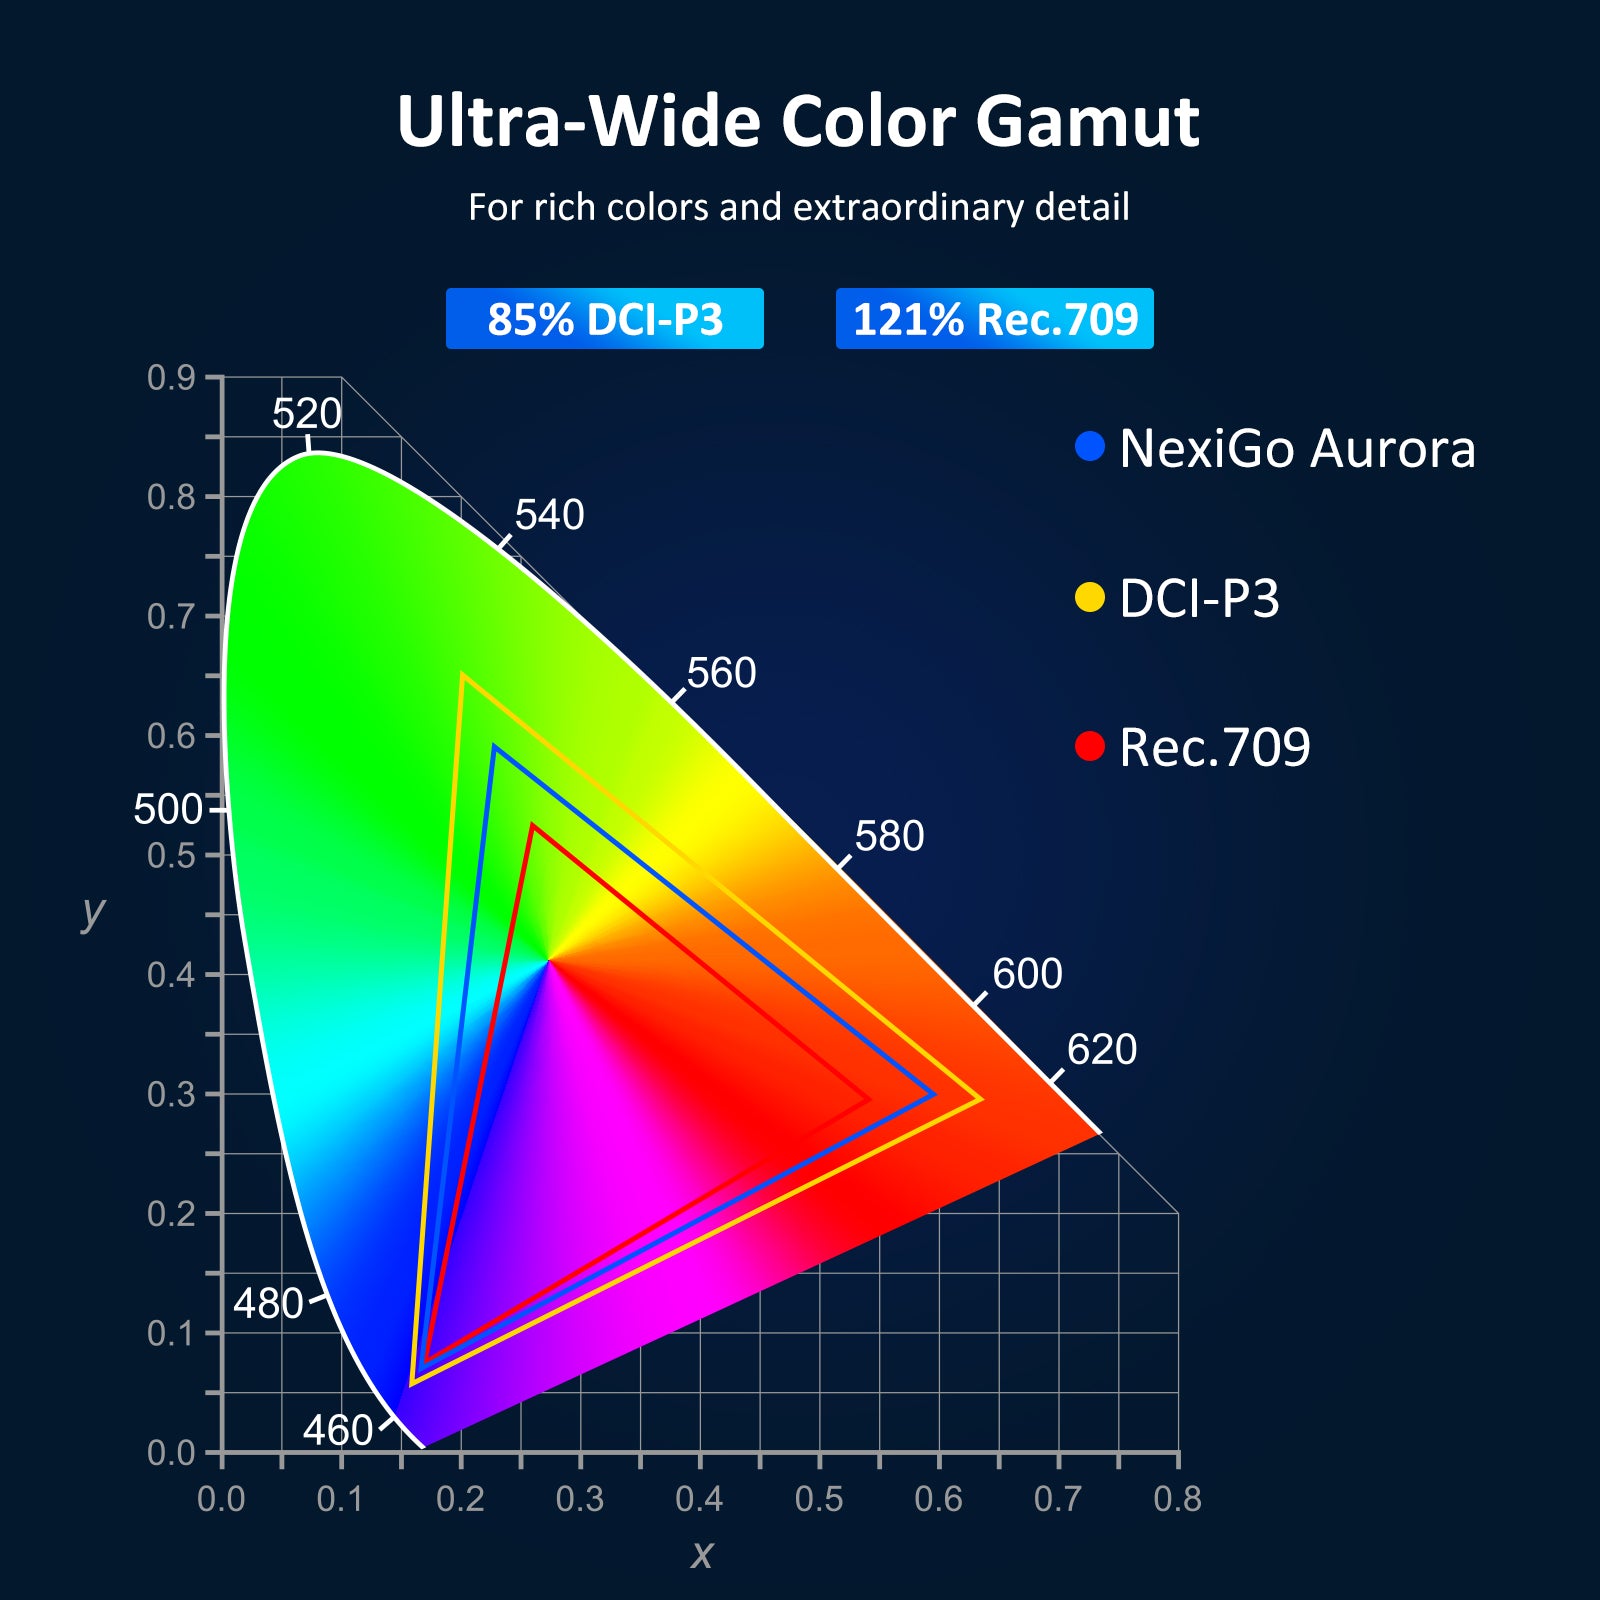 PJ90 utilizes 121% Rec.709 color gamut, surpassing ODCI-P3 and Rec.709 ranges.